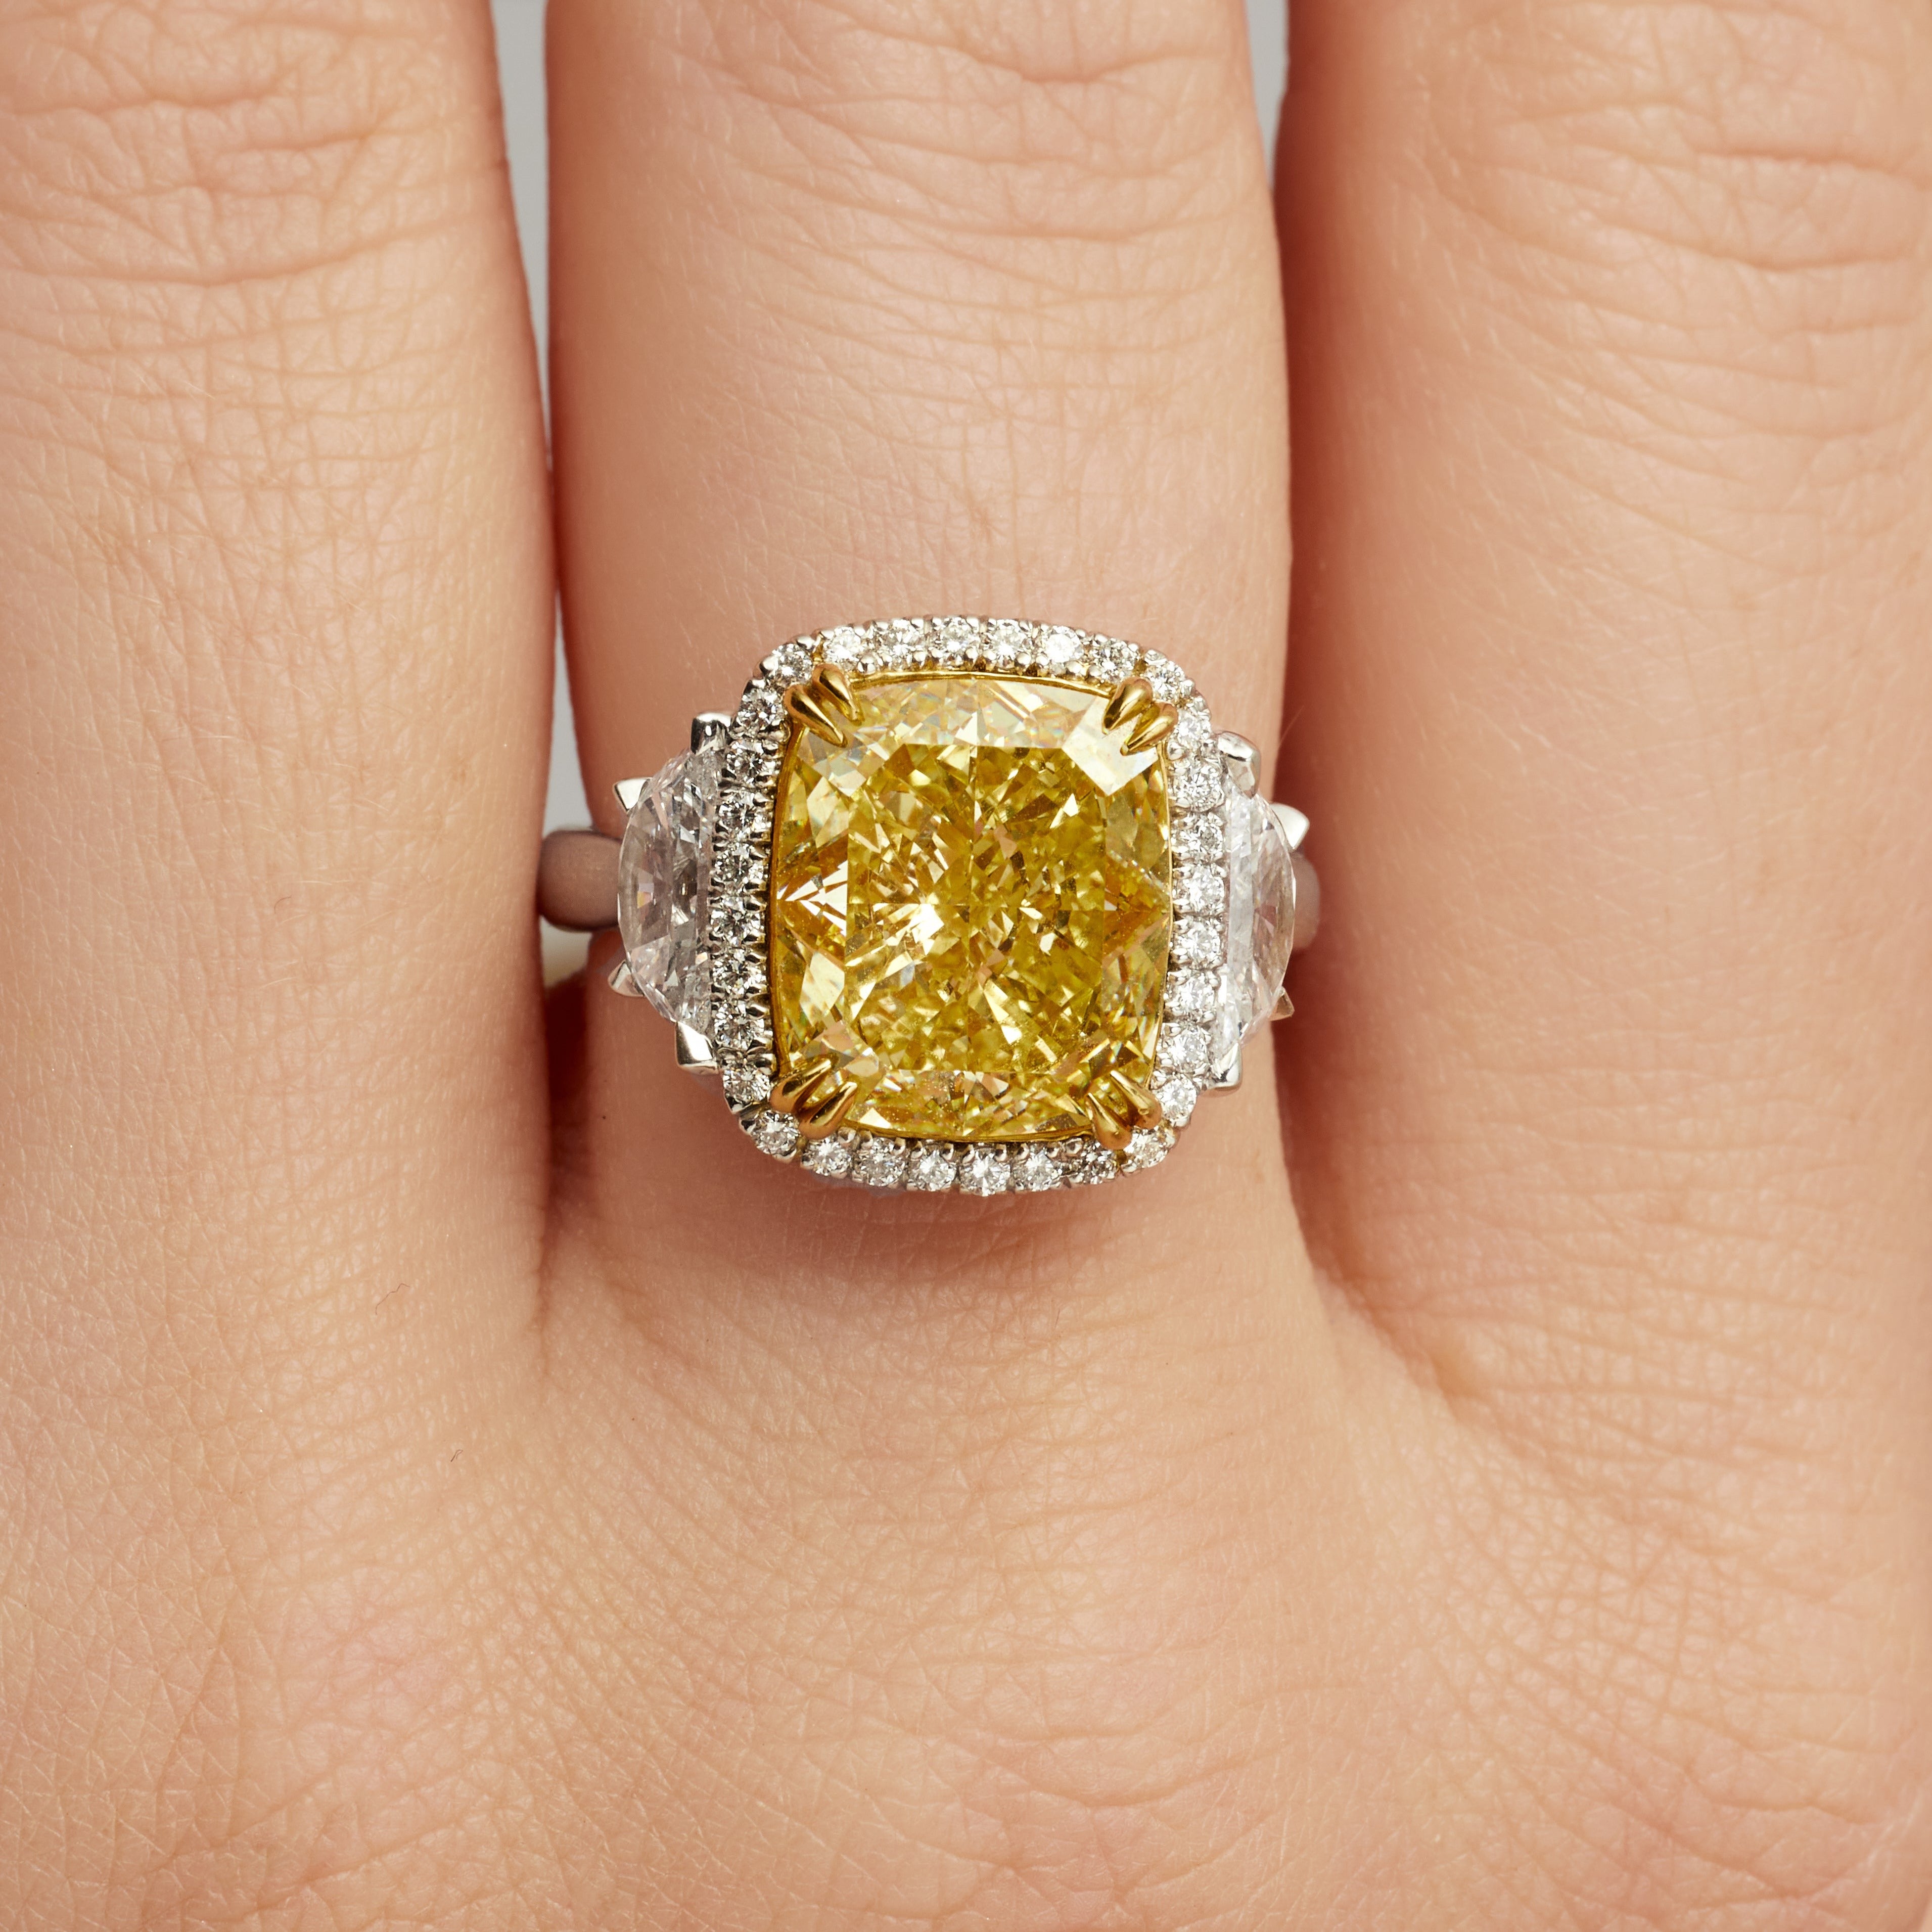 Cushion Cut Fancy Intense Yellow Diamond and Pavé Diamond Ring in 18 Karat Yellow Gold and Platinum